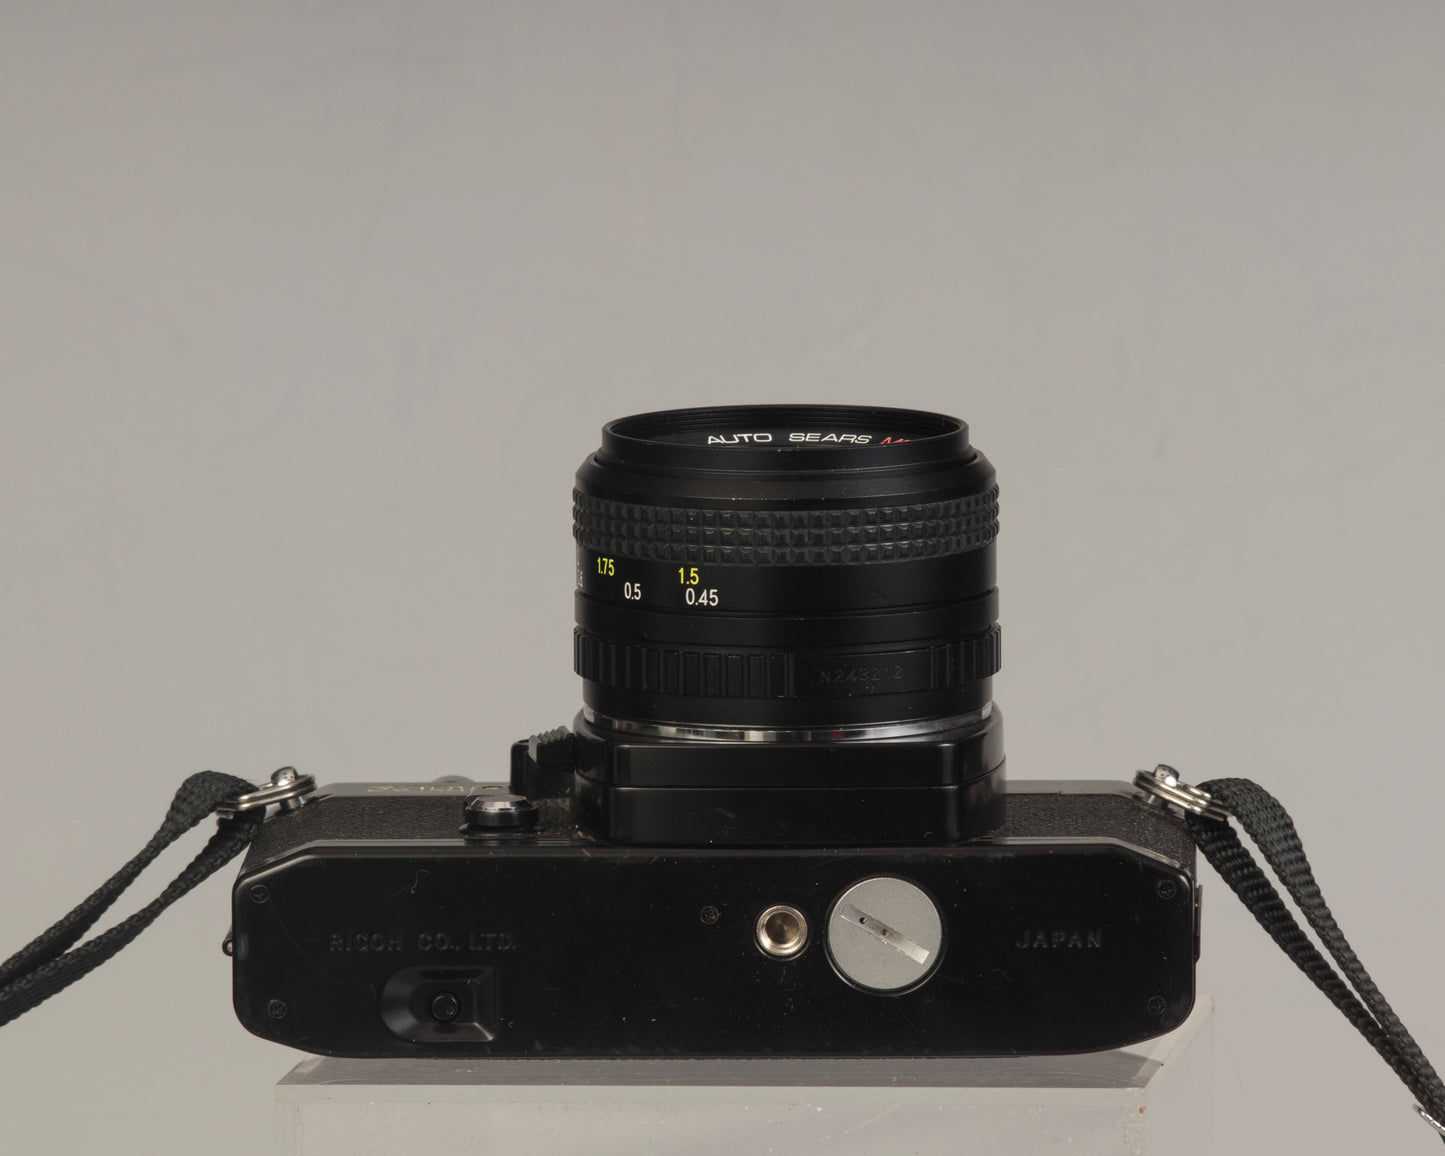 Ricoh XR-500 (aka KR-5) with Auto Sears MC 50mm f1.7 (a rebranded Ricoh lens) - bottom view